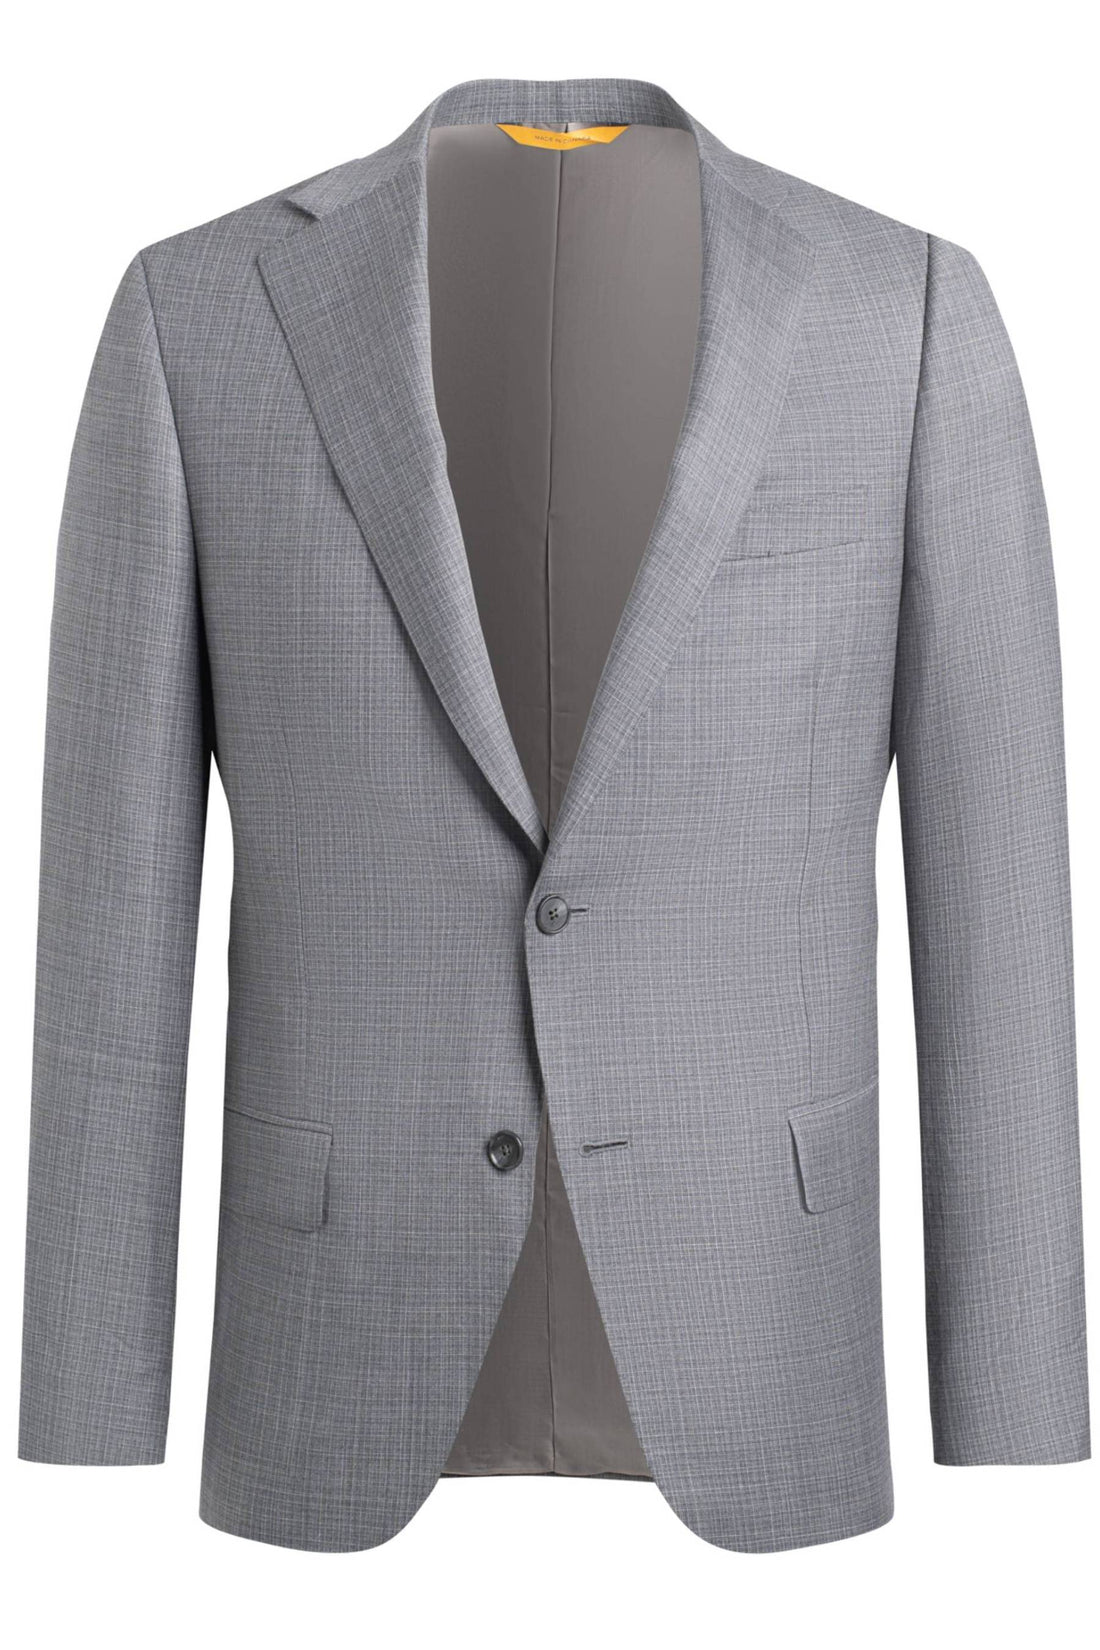 Heritage Gold Grey 130's Neat Suit Jacket 